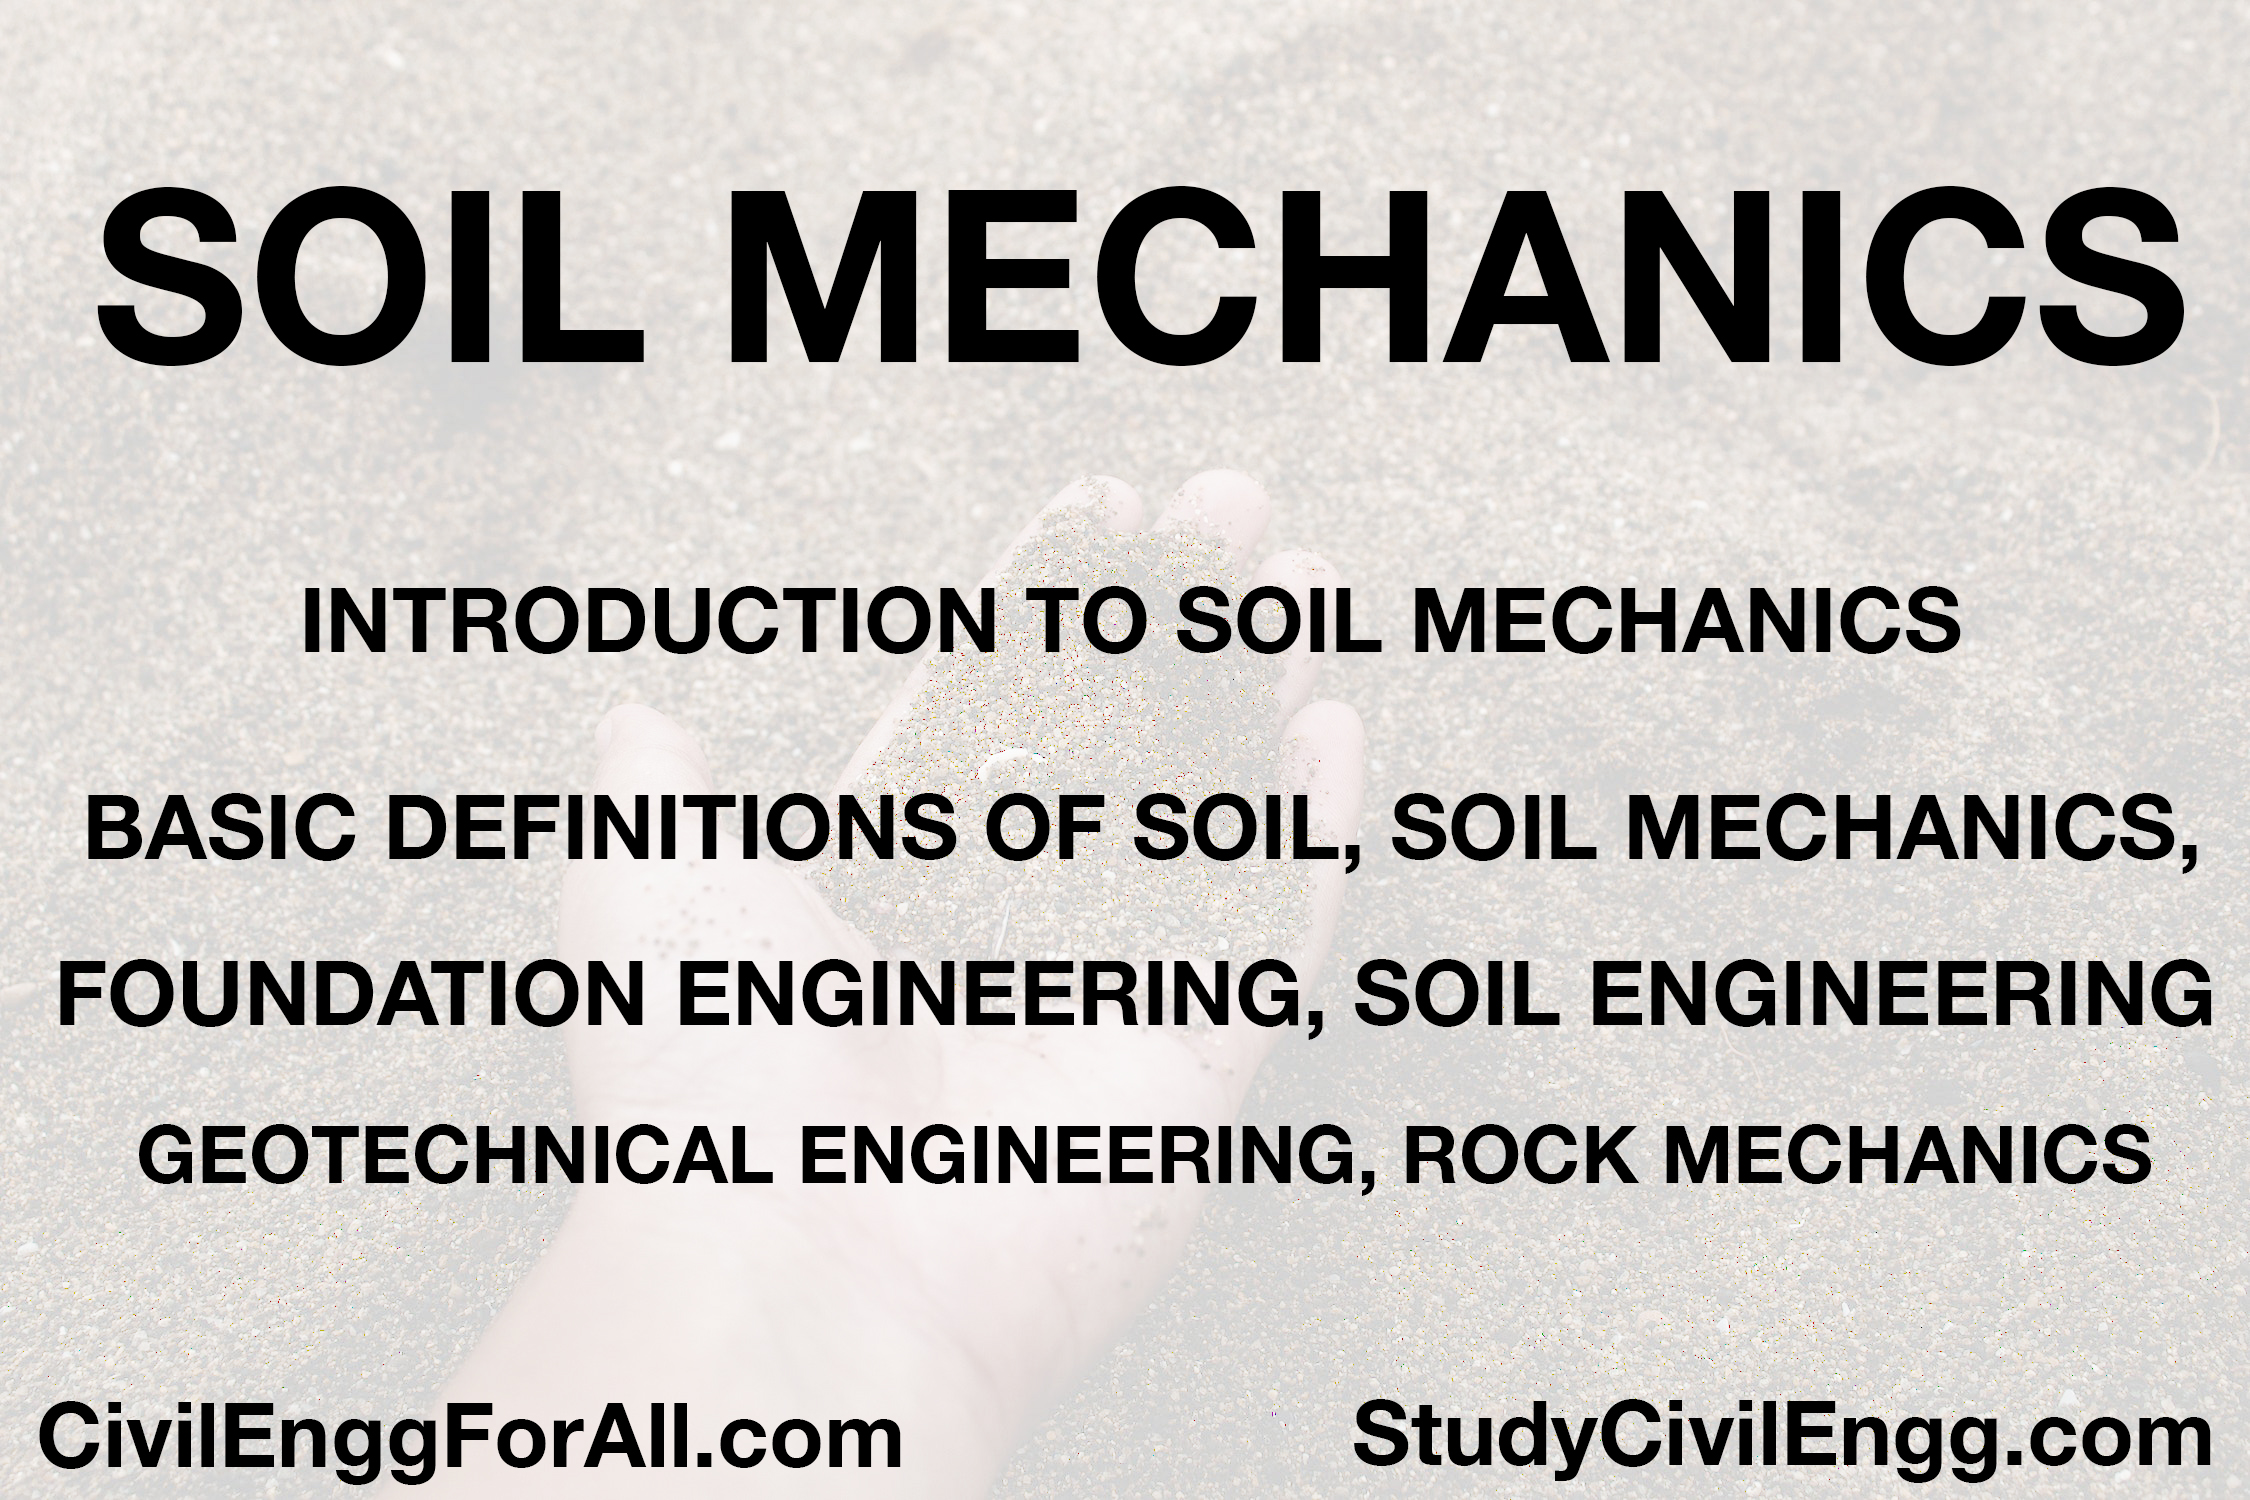 INTRODUCTION TO SOIL MECHANICS - BASIC DEFINITIONS OF SOIL MECHANICS TERMS - StudyCivilEngg.com